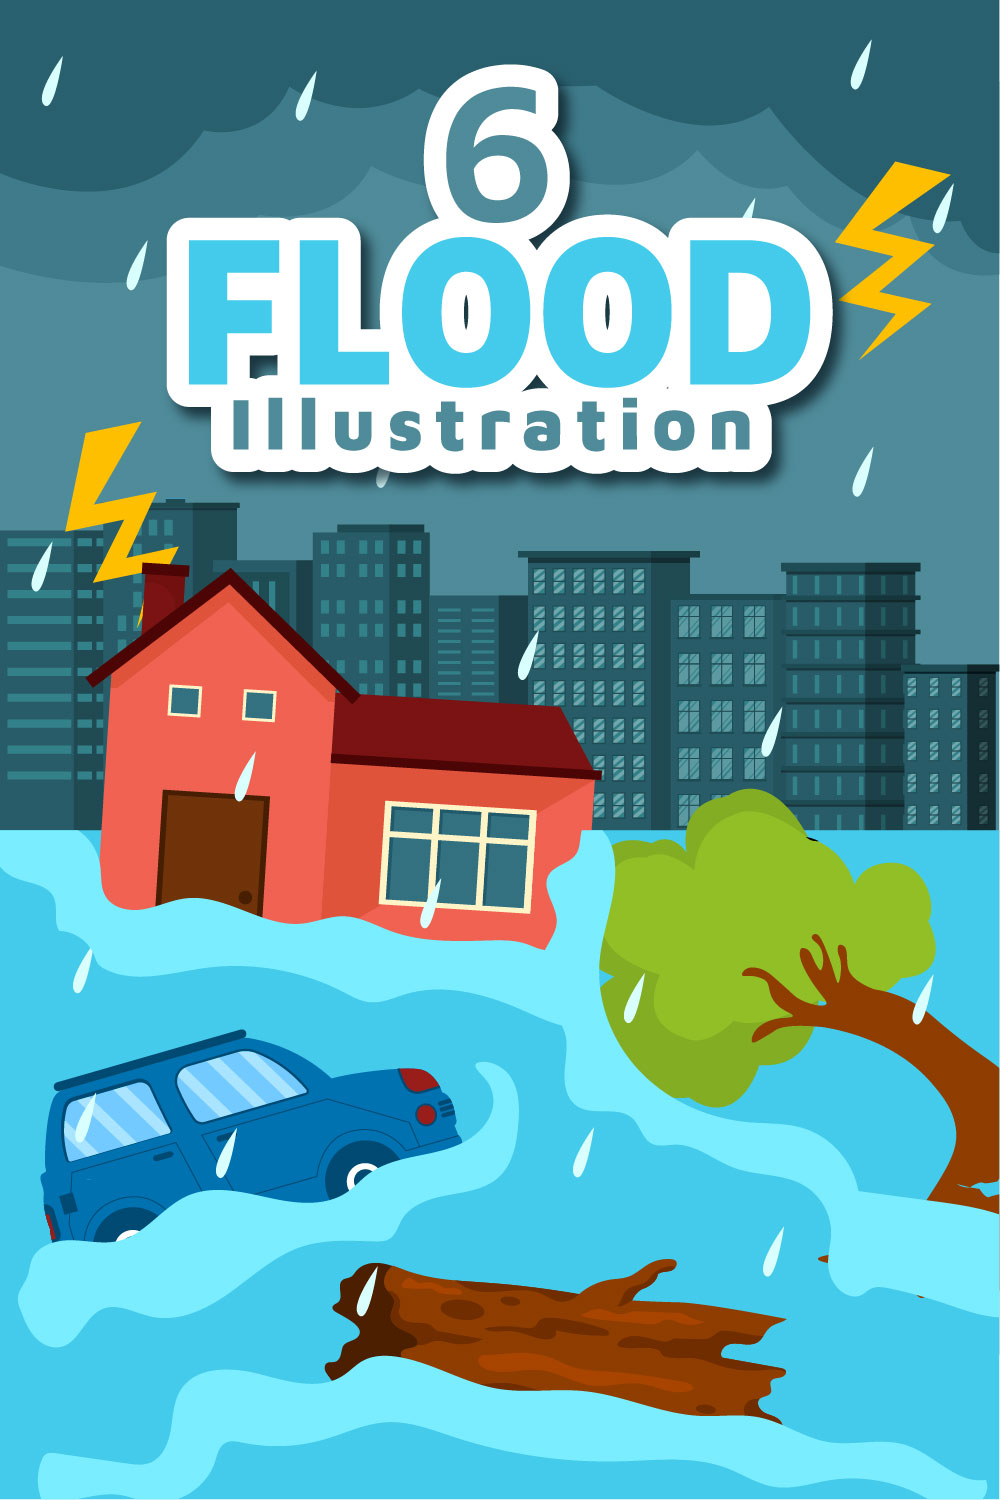 6 Floods Vector Illustration pinterest preview image.